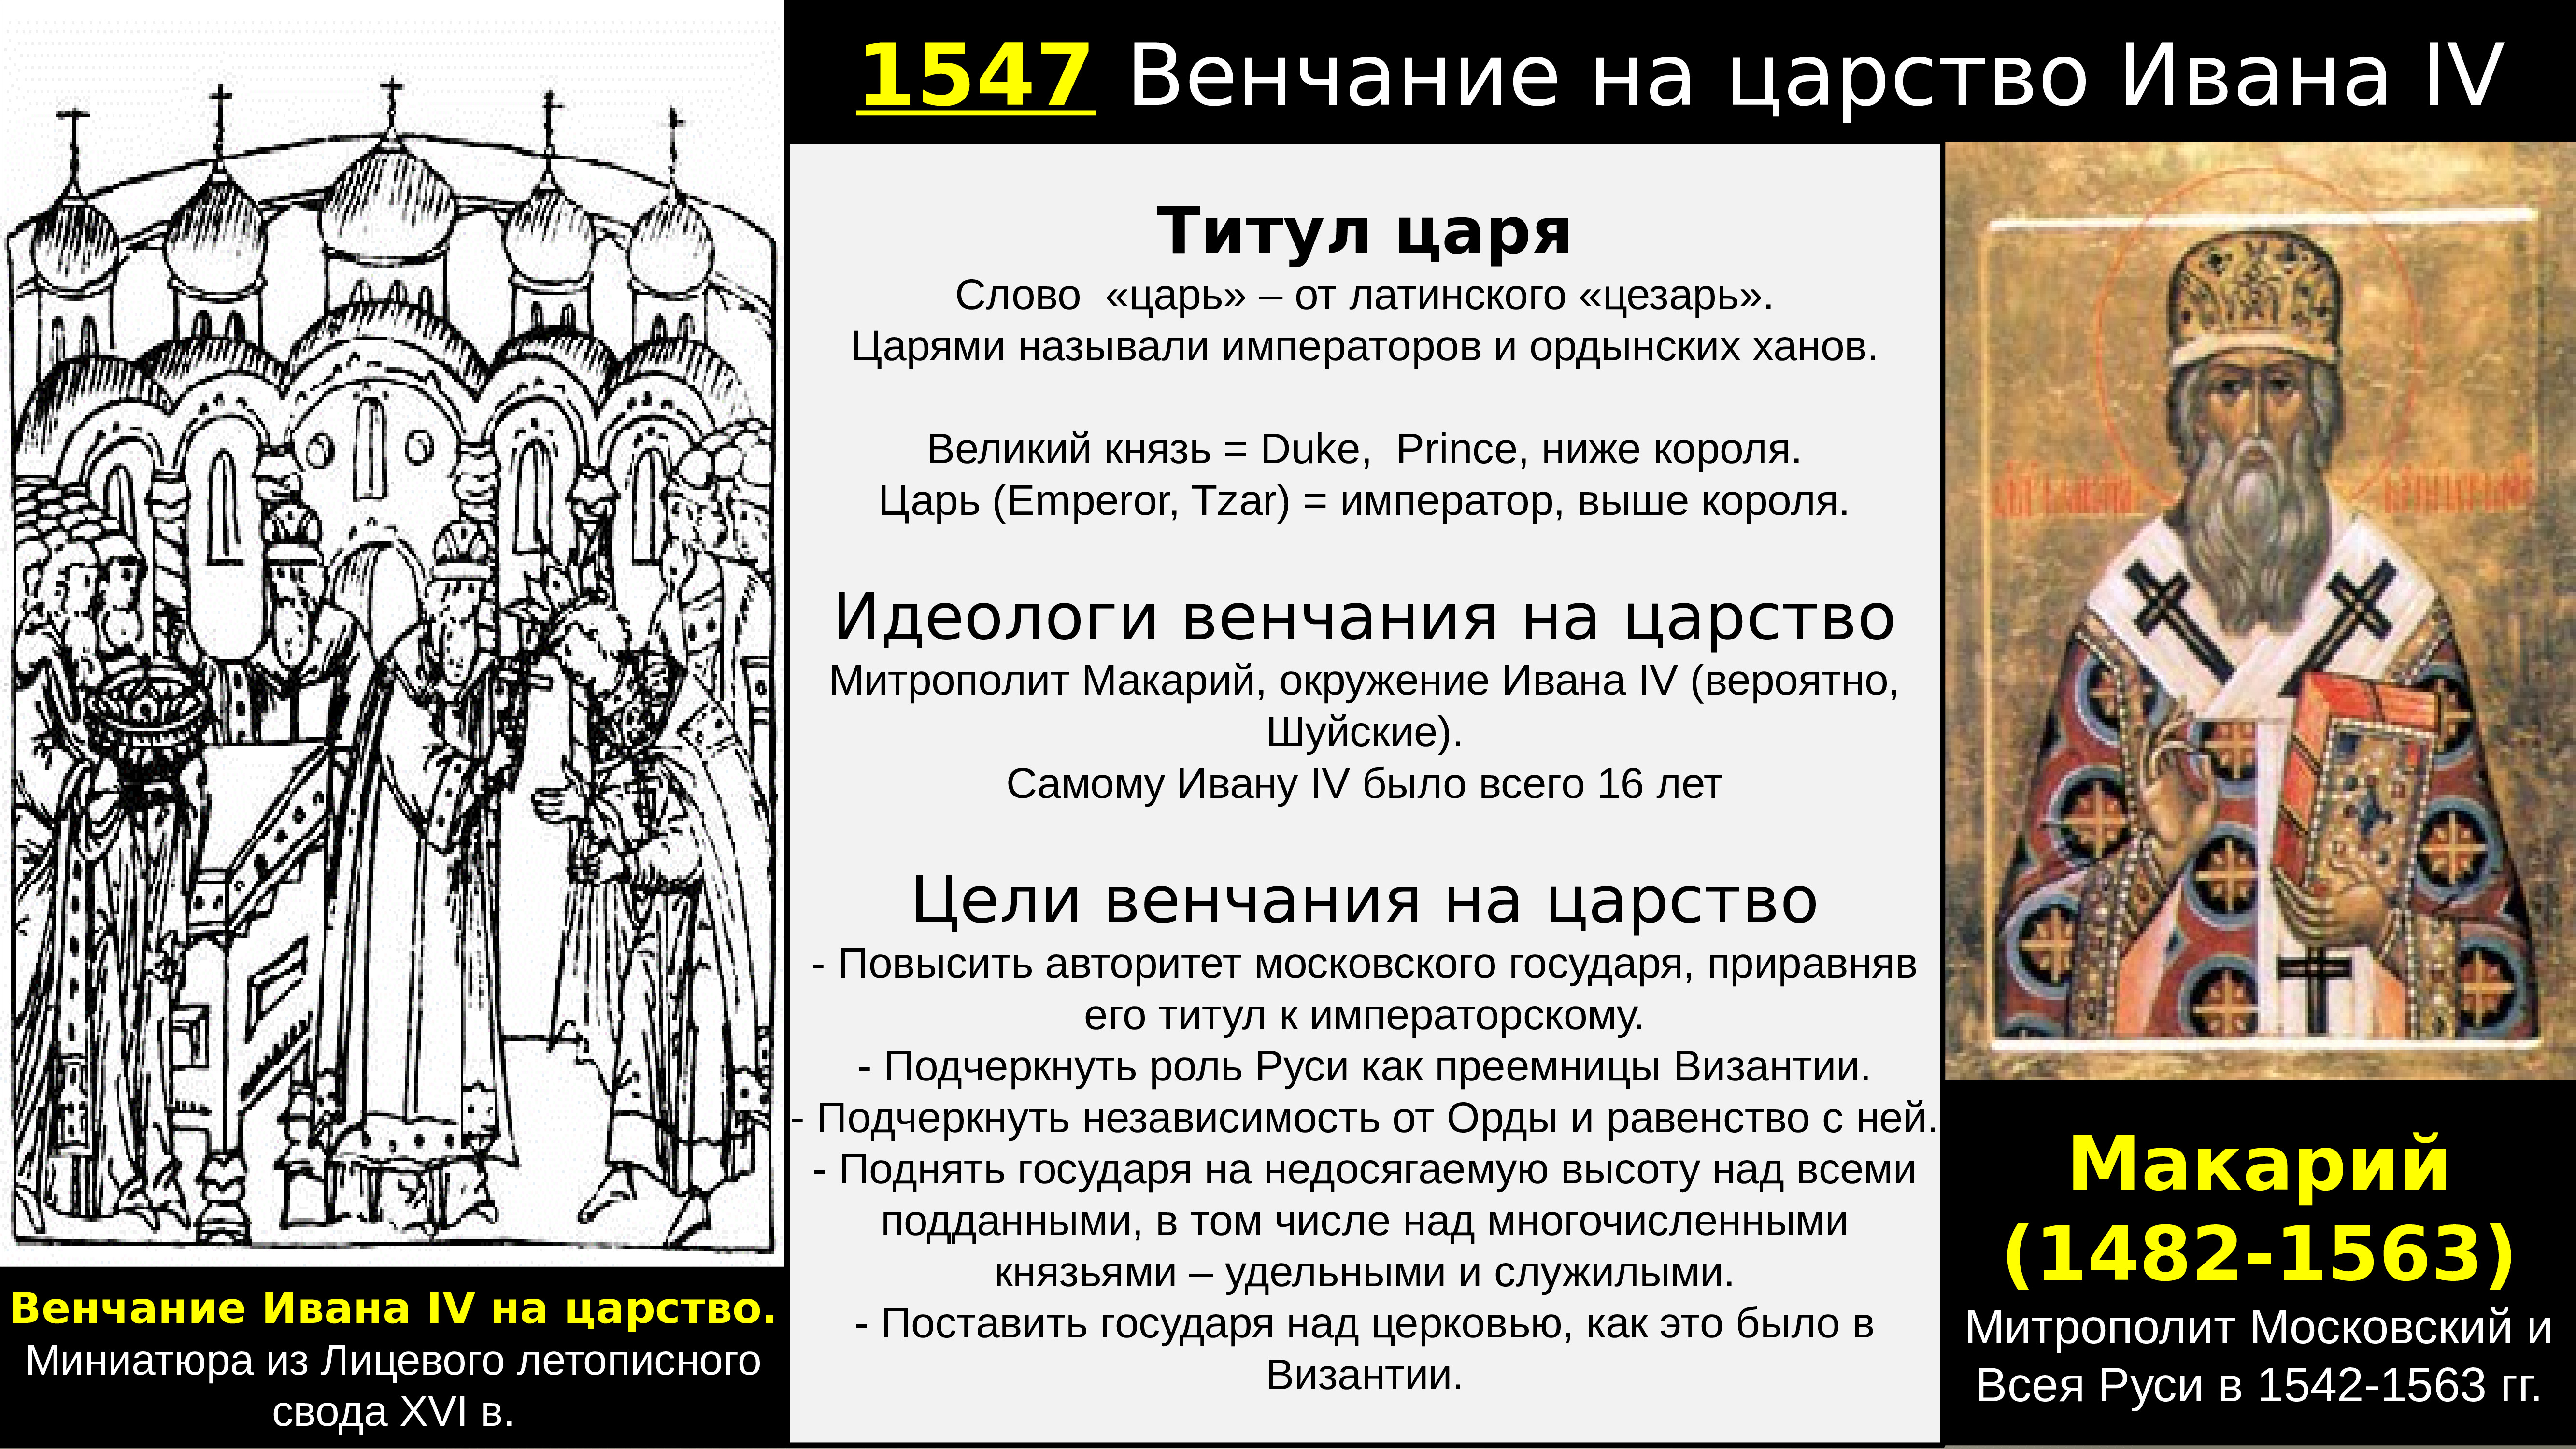 Венчание на царство ивана грозного происходило в. 1547 Венчание Ивана Грозного на царство. 1547 Венчание Ивана Грозного. Венчание Ивана Грозного.